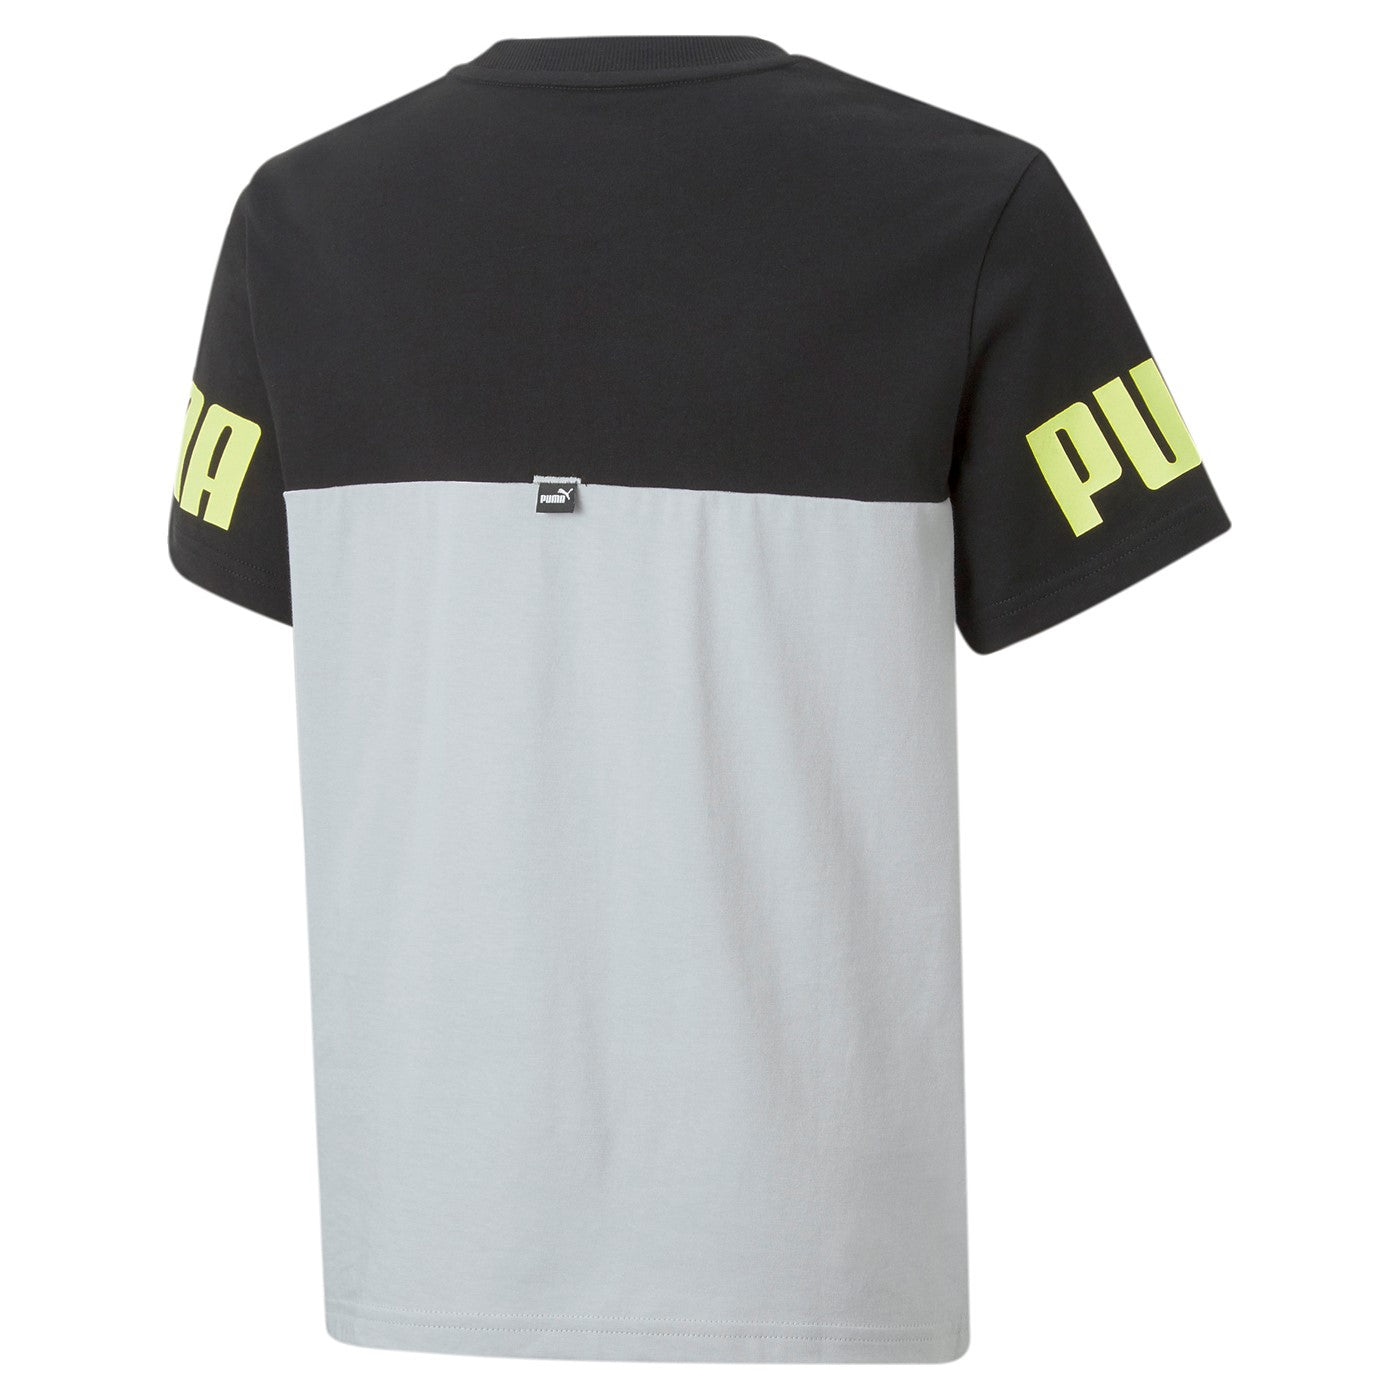 Puma T-shirt Power 847305 19 harbor mist-black